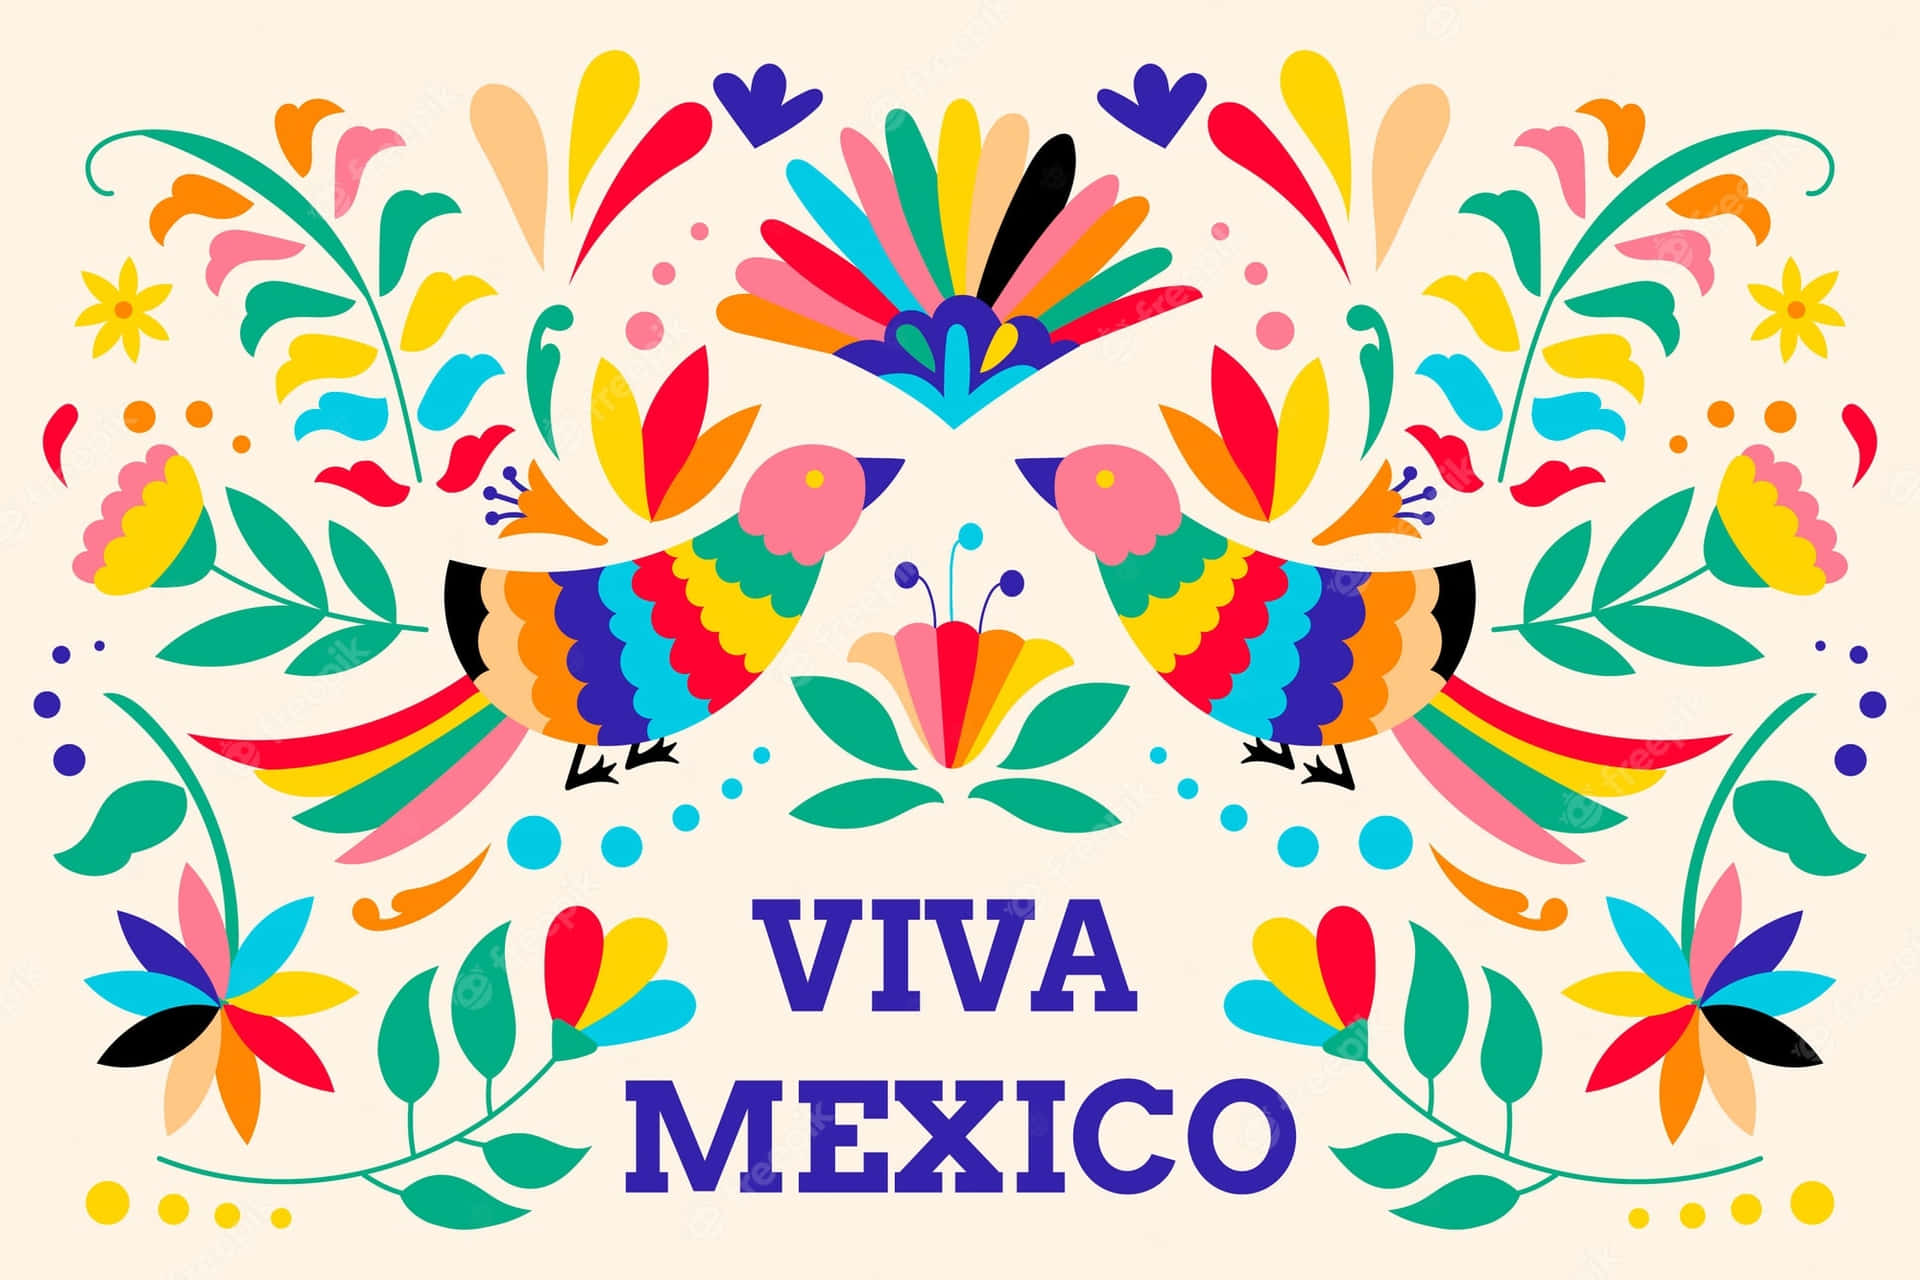 Viva Mexico - Colorful Mexican Art Wallpaper